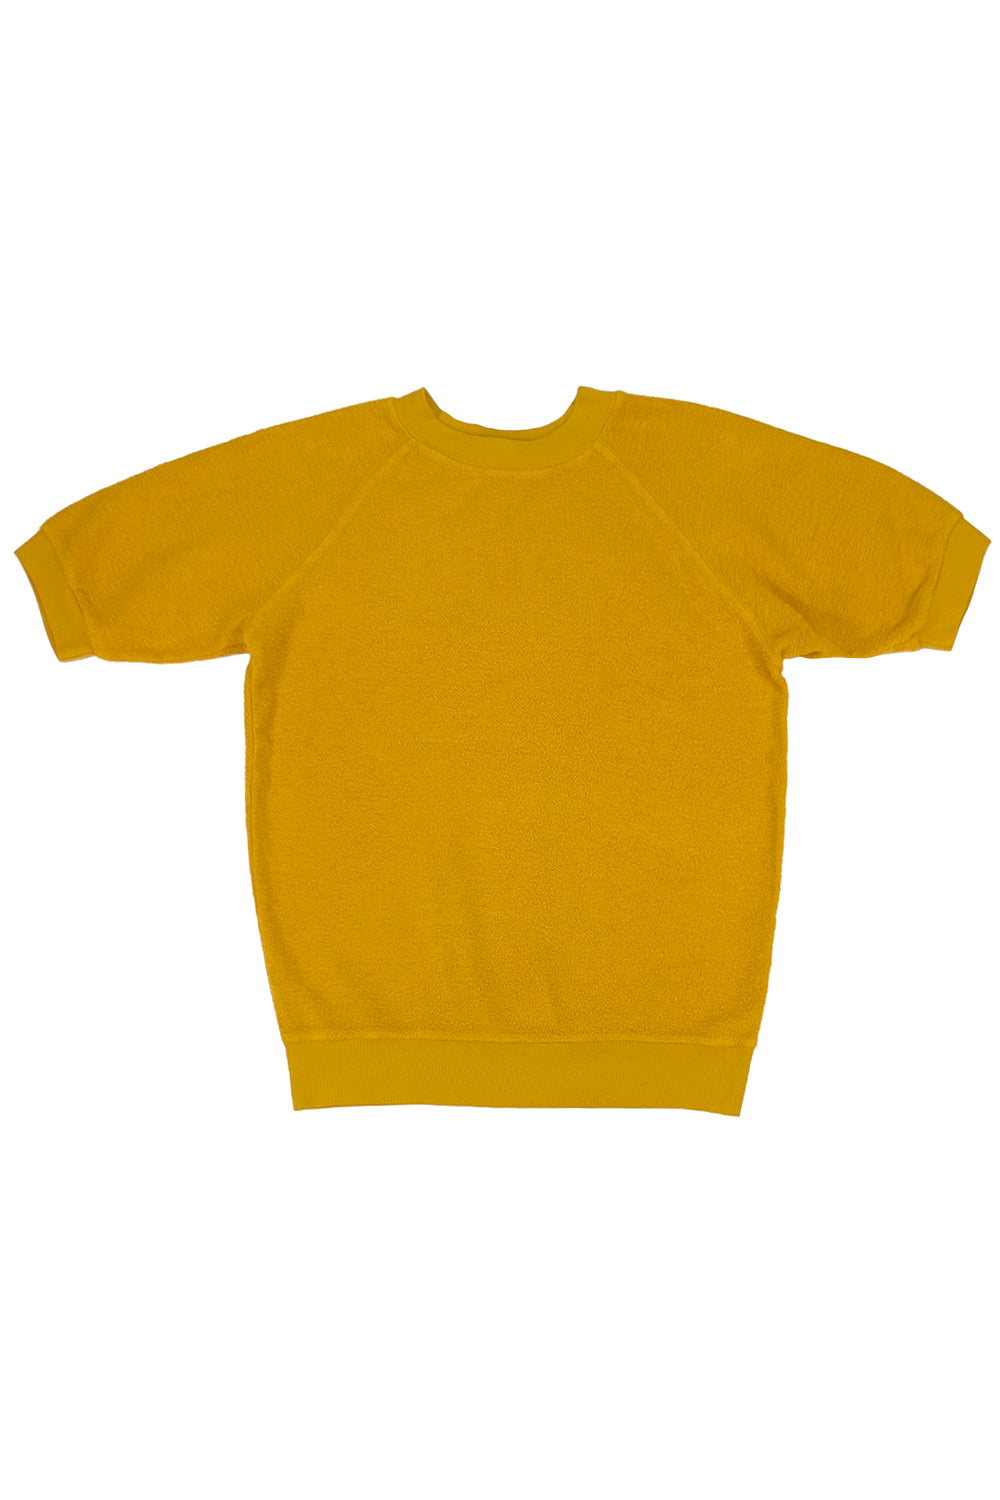 Short Sleeve Raglan Sherpa Sweatshirt | Jungmaven Hemp Clothing & Accessories / Color: Spicy Mustard